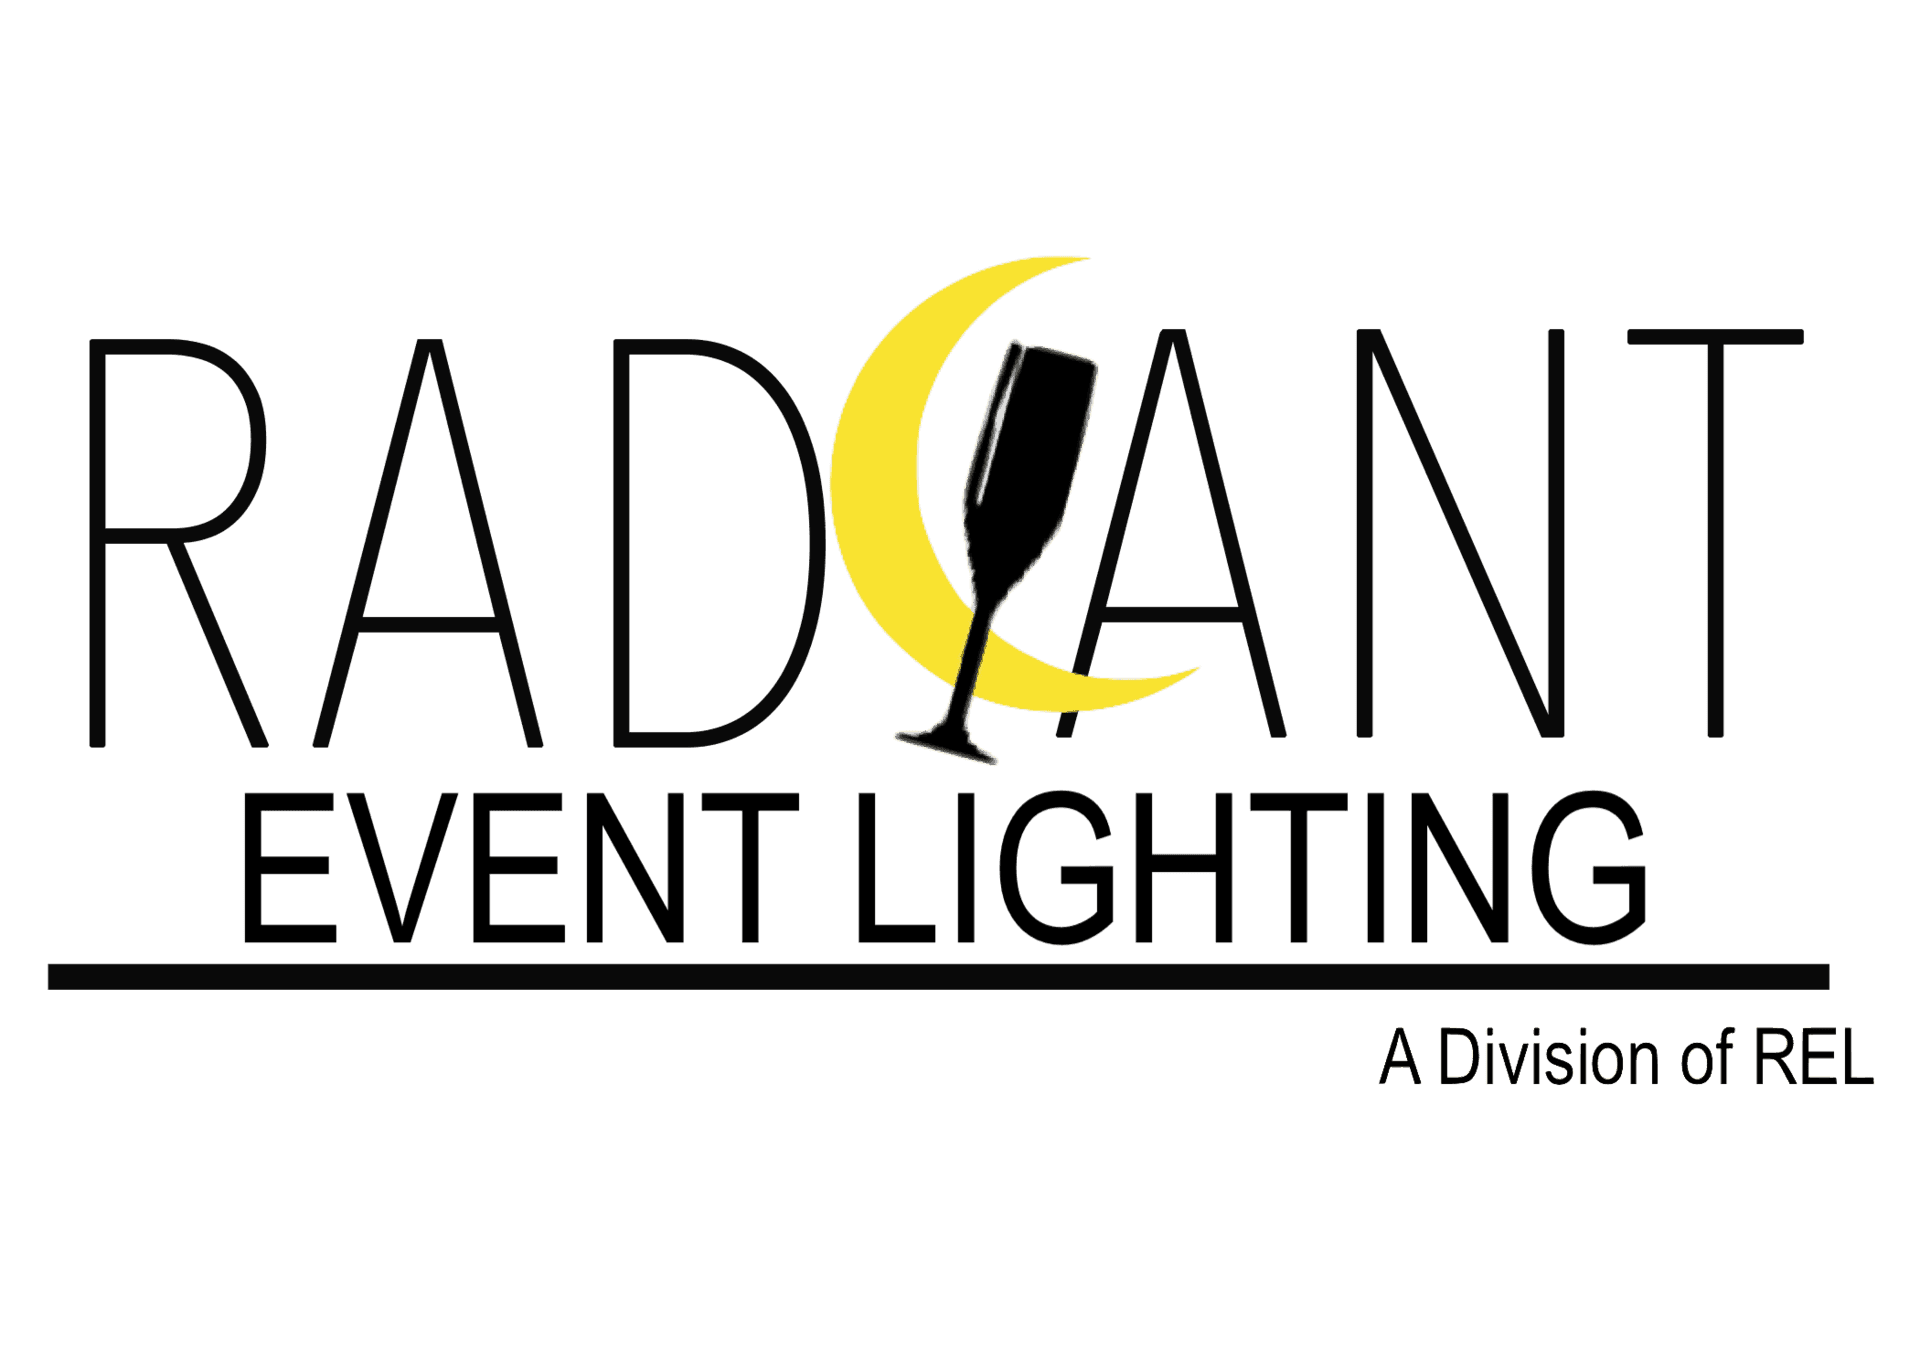 St. Louis Event Lighting  Radiant Exterior Lighting